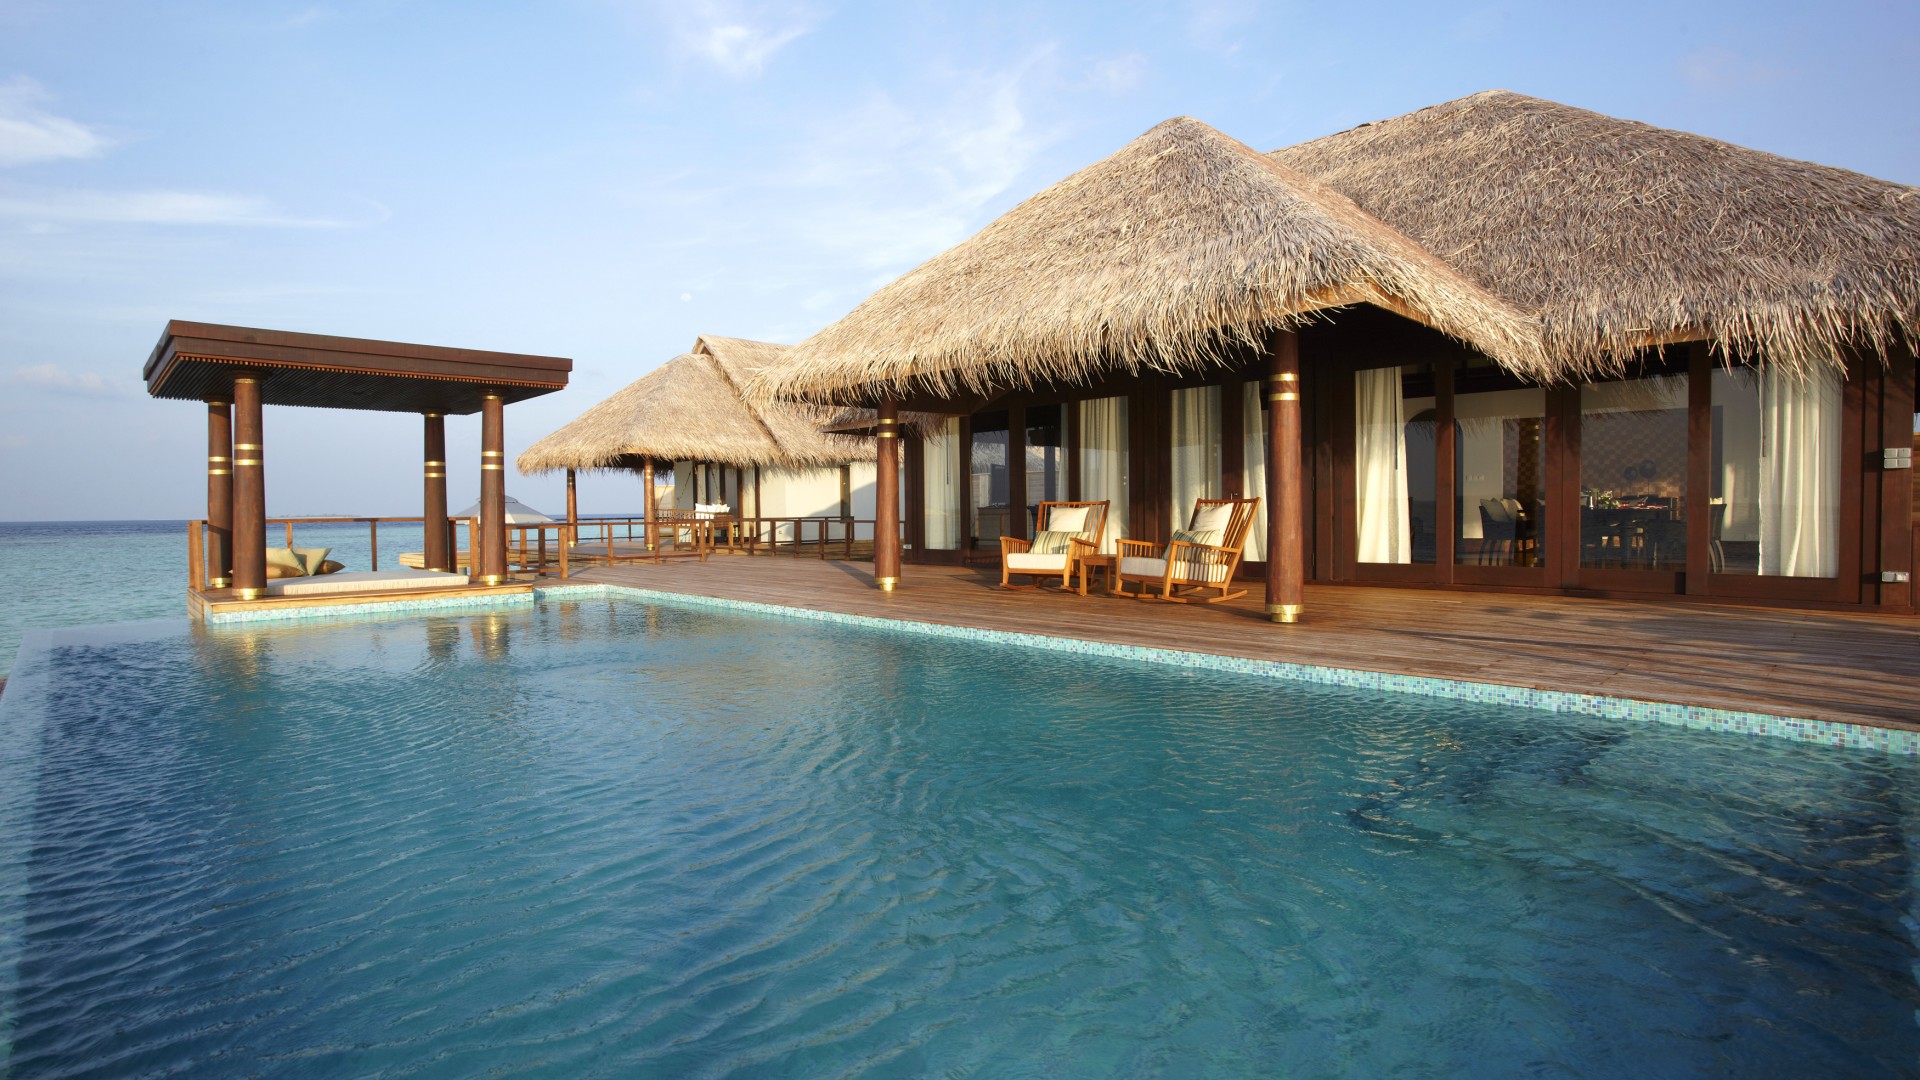 Anantara Kihavah Villas, Maldives, resort, pool, ocean, sea, water, travel, booking, vacation, hotel, sky, blue, World's best diving sites (horizontal)